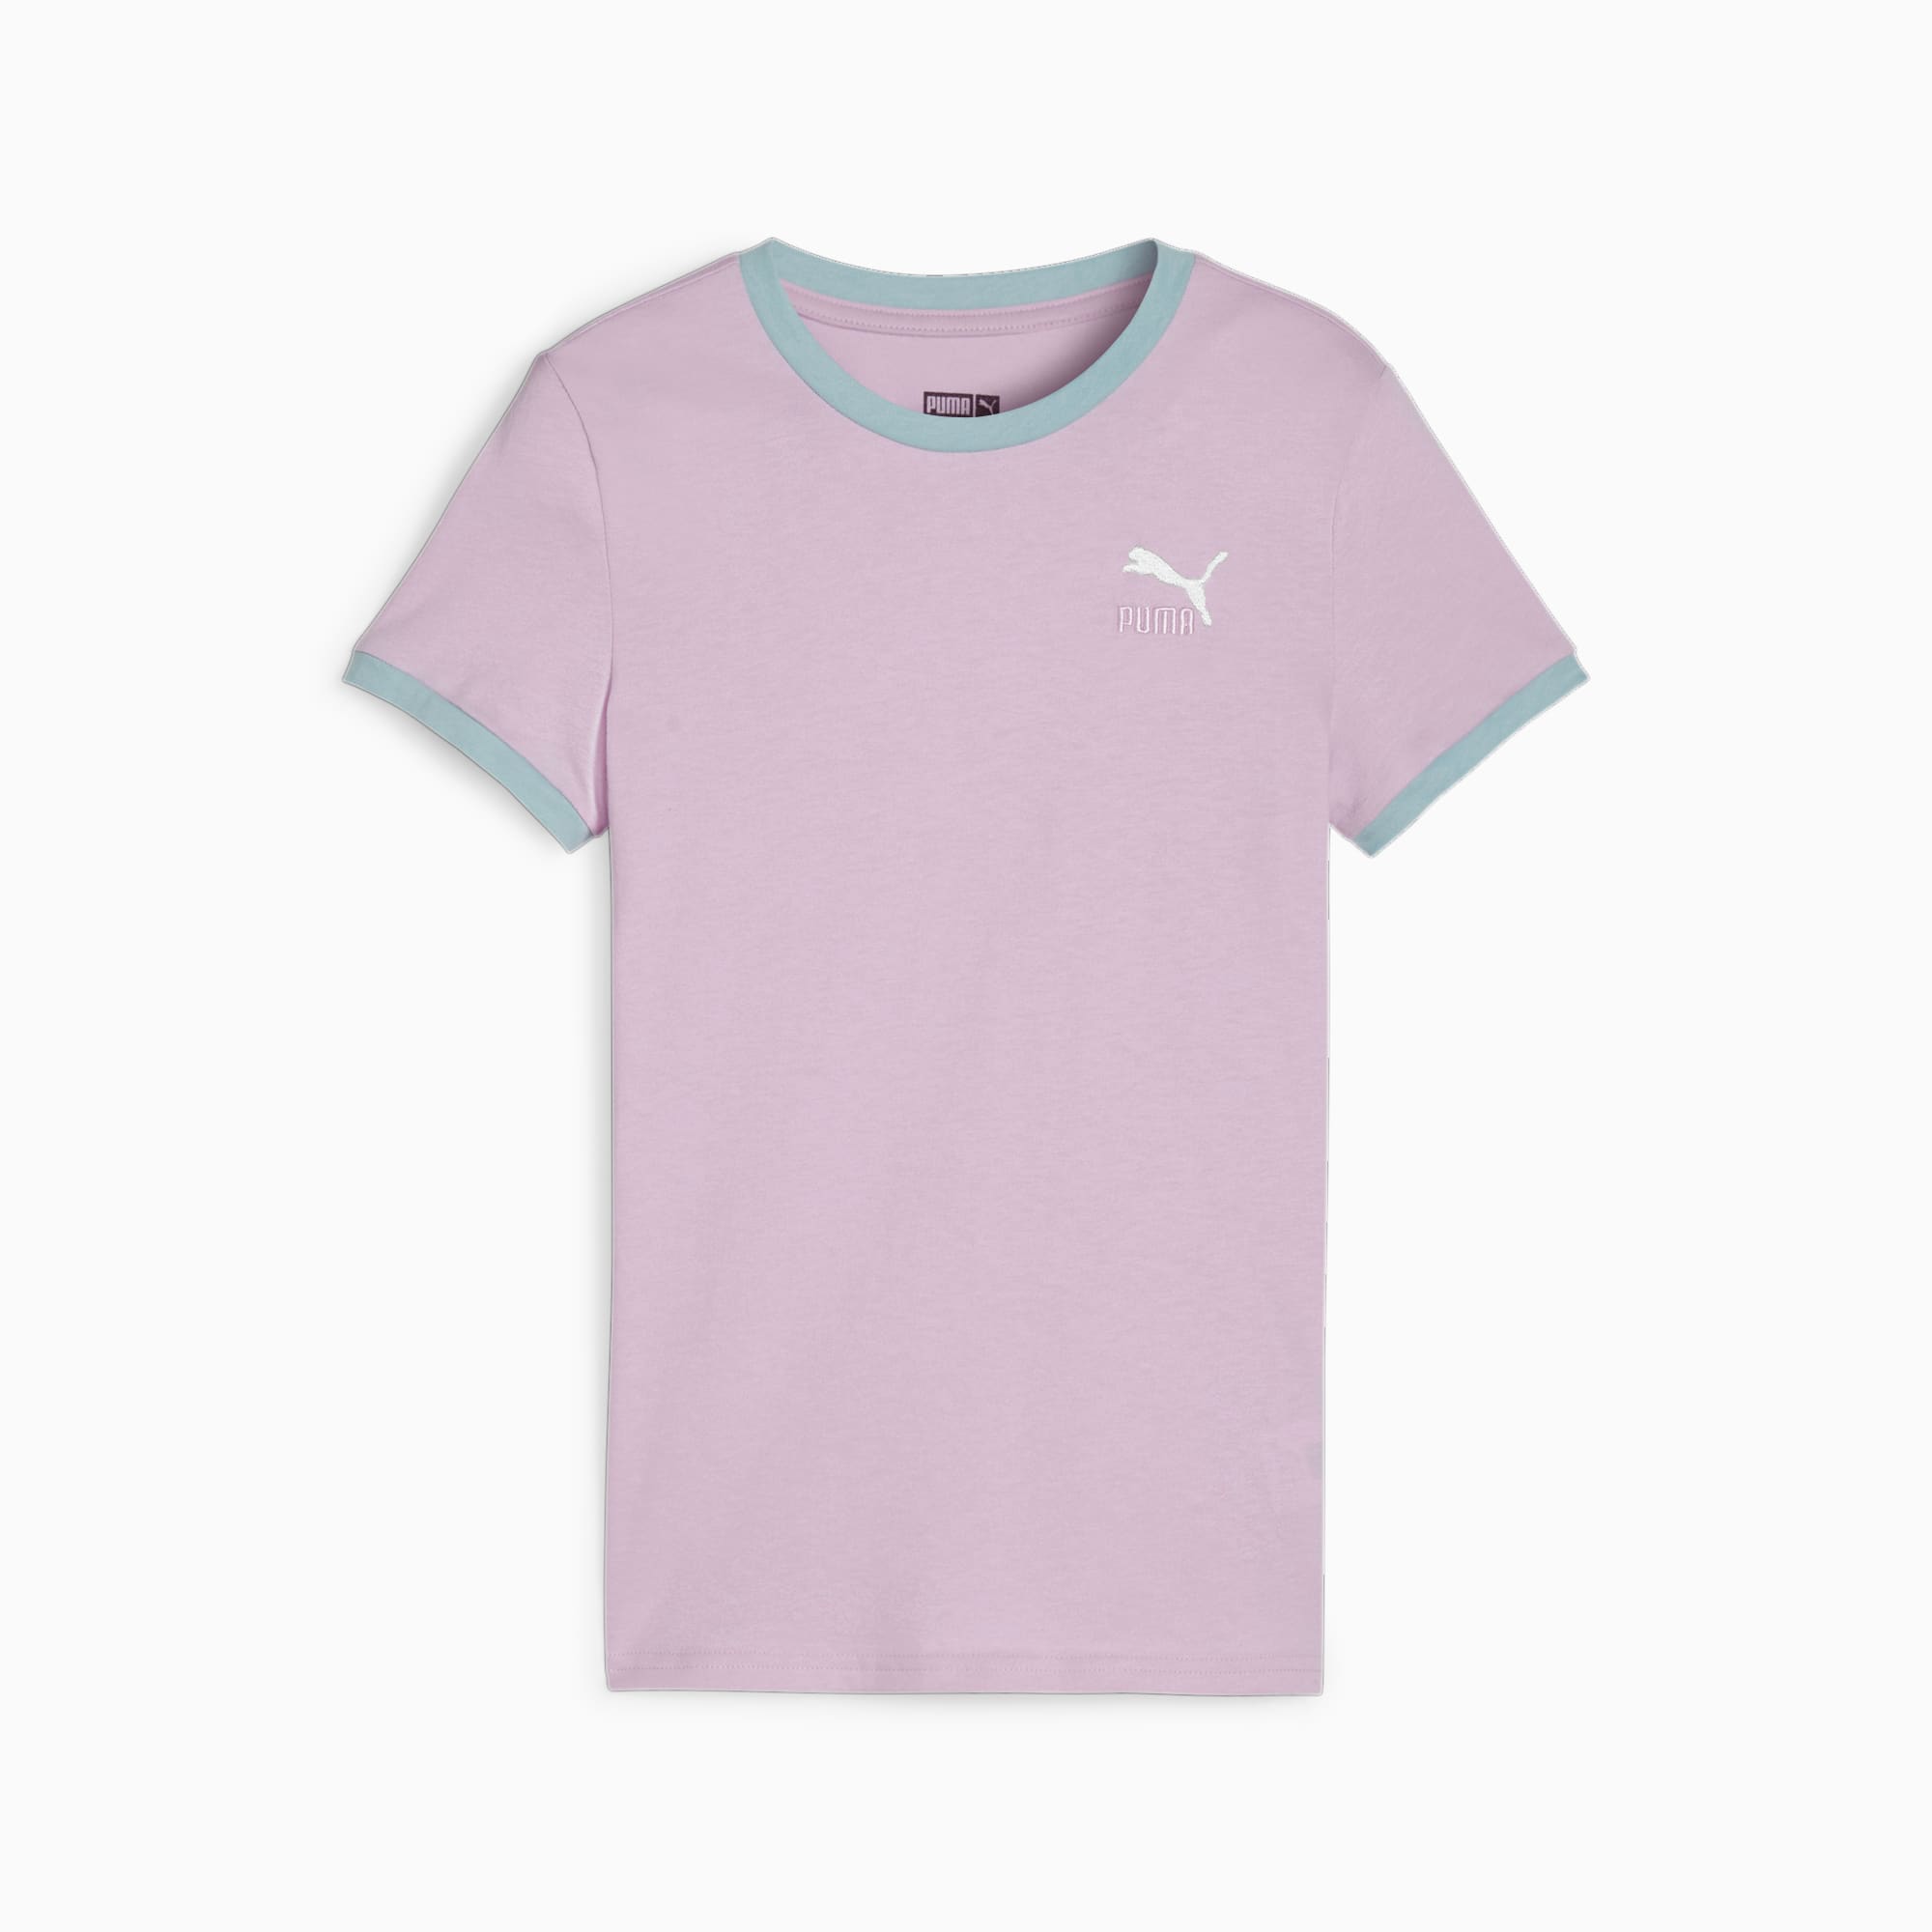 PUMA Classics Match Point Youth T-Shirt, Grape Mist, Size 128, Clothing